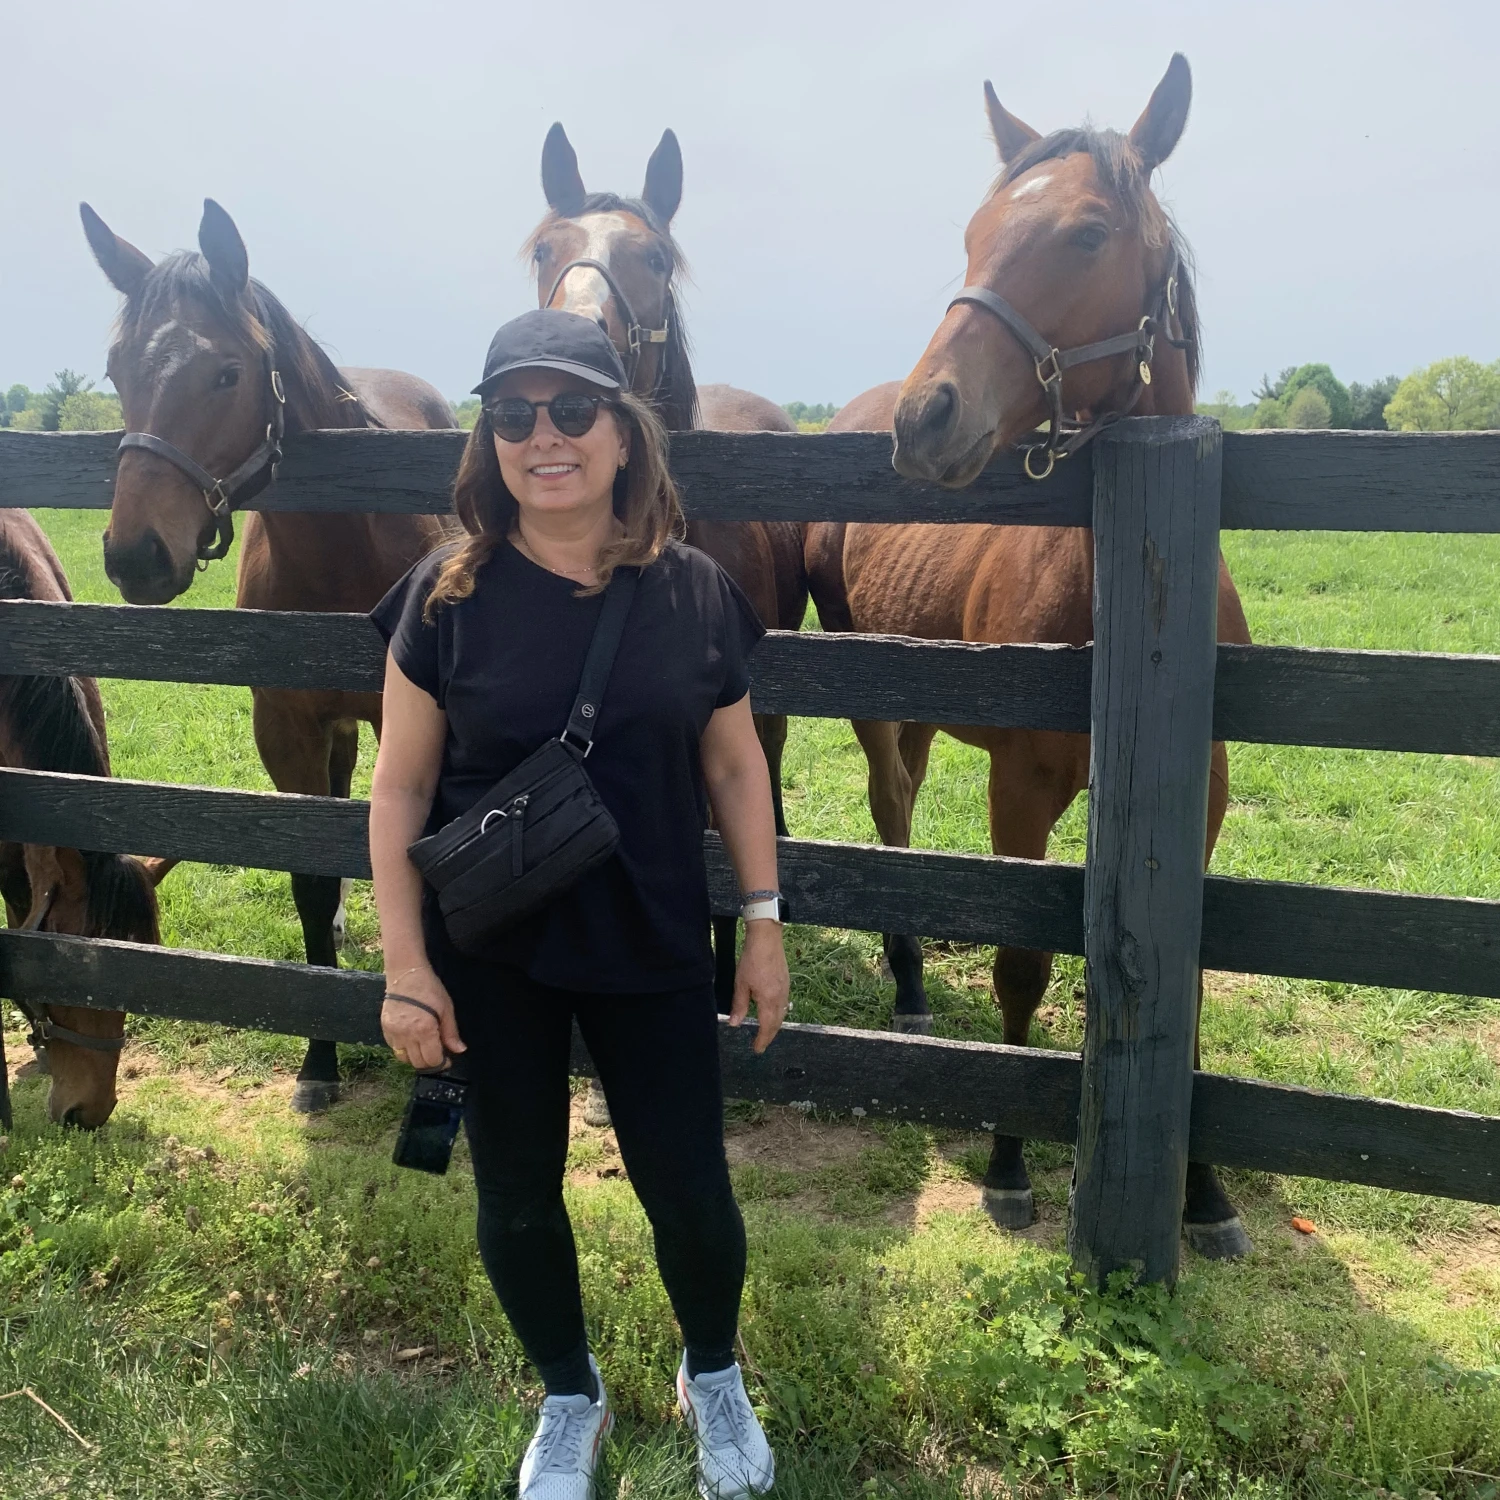 Travel advisor posing with horses